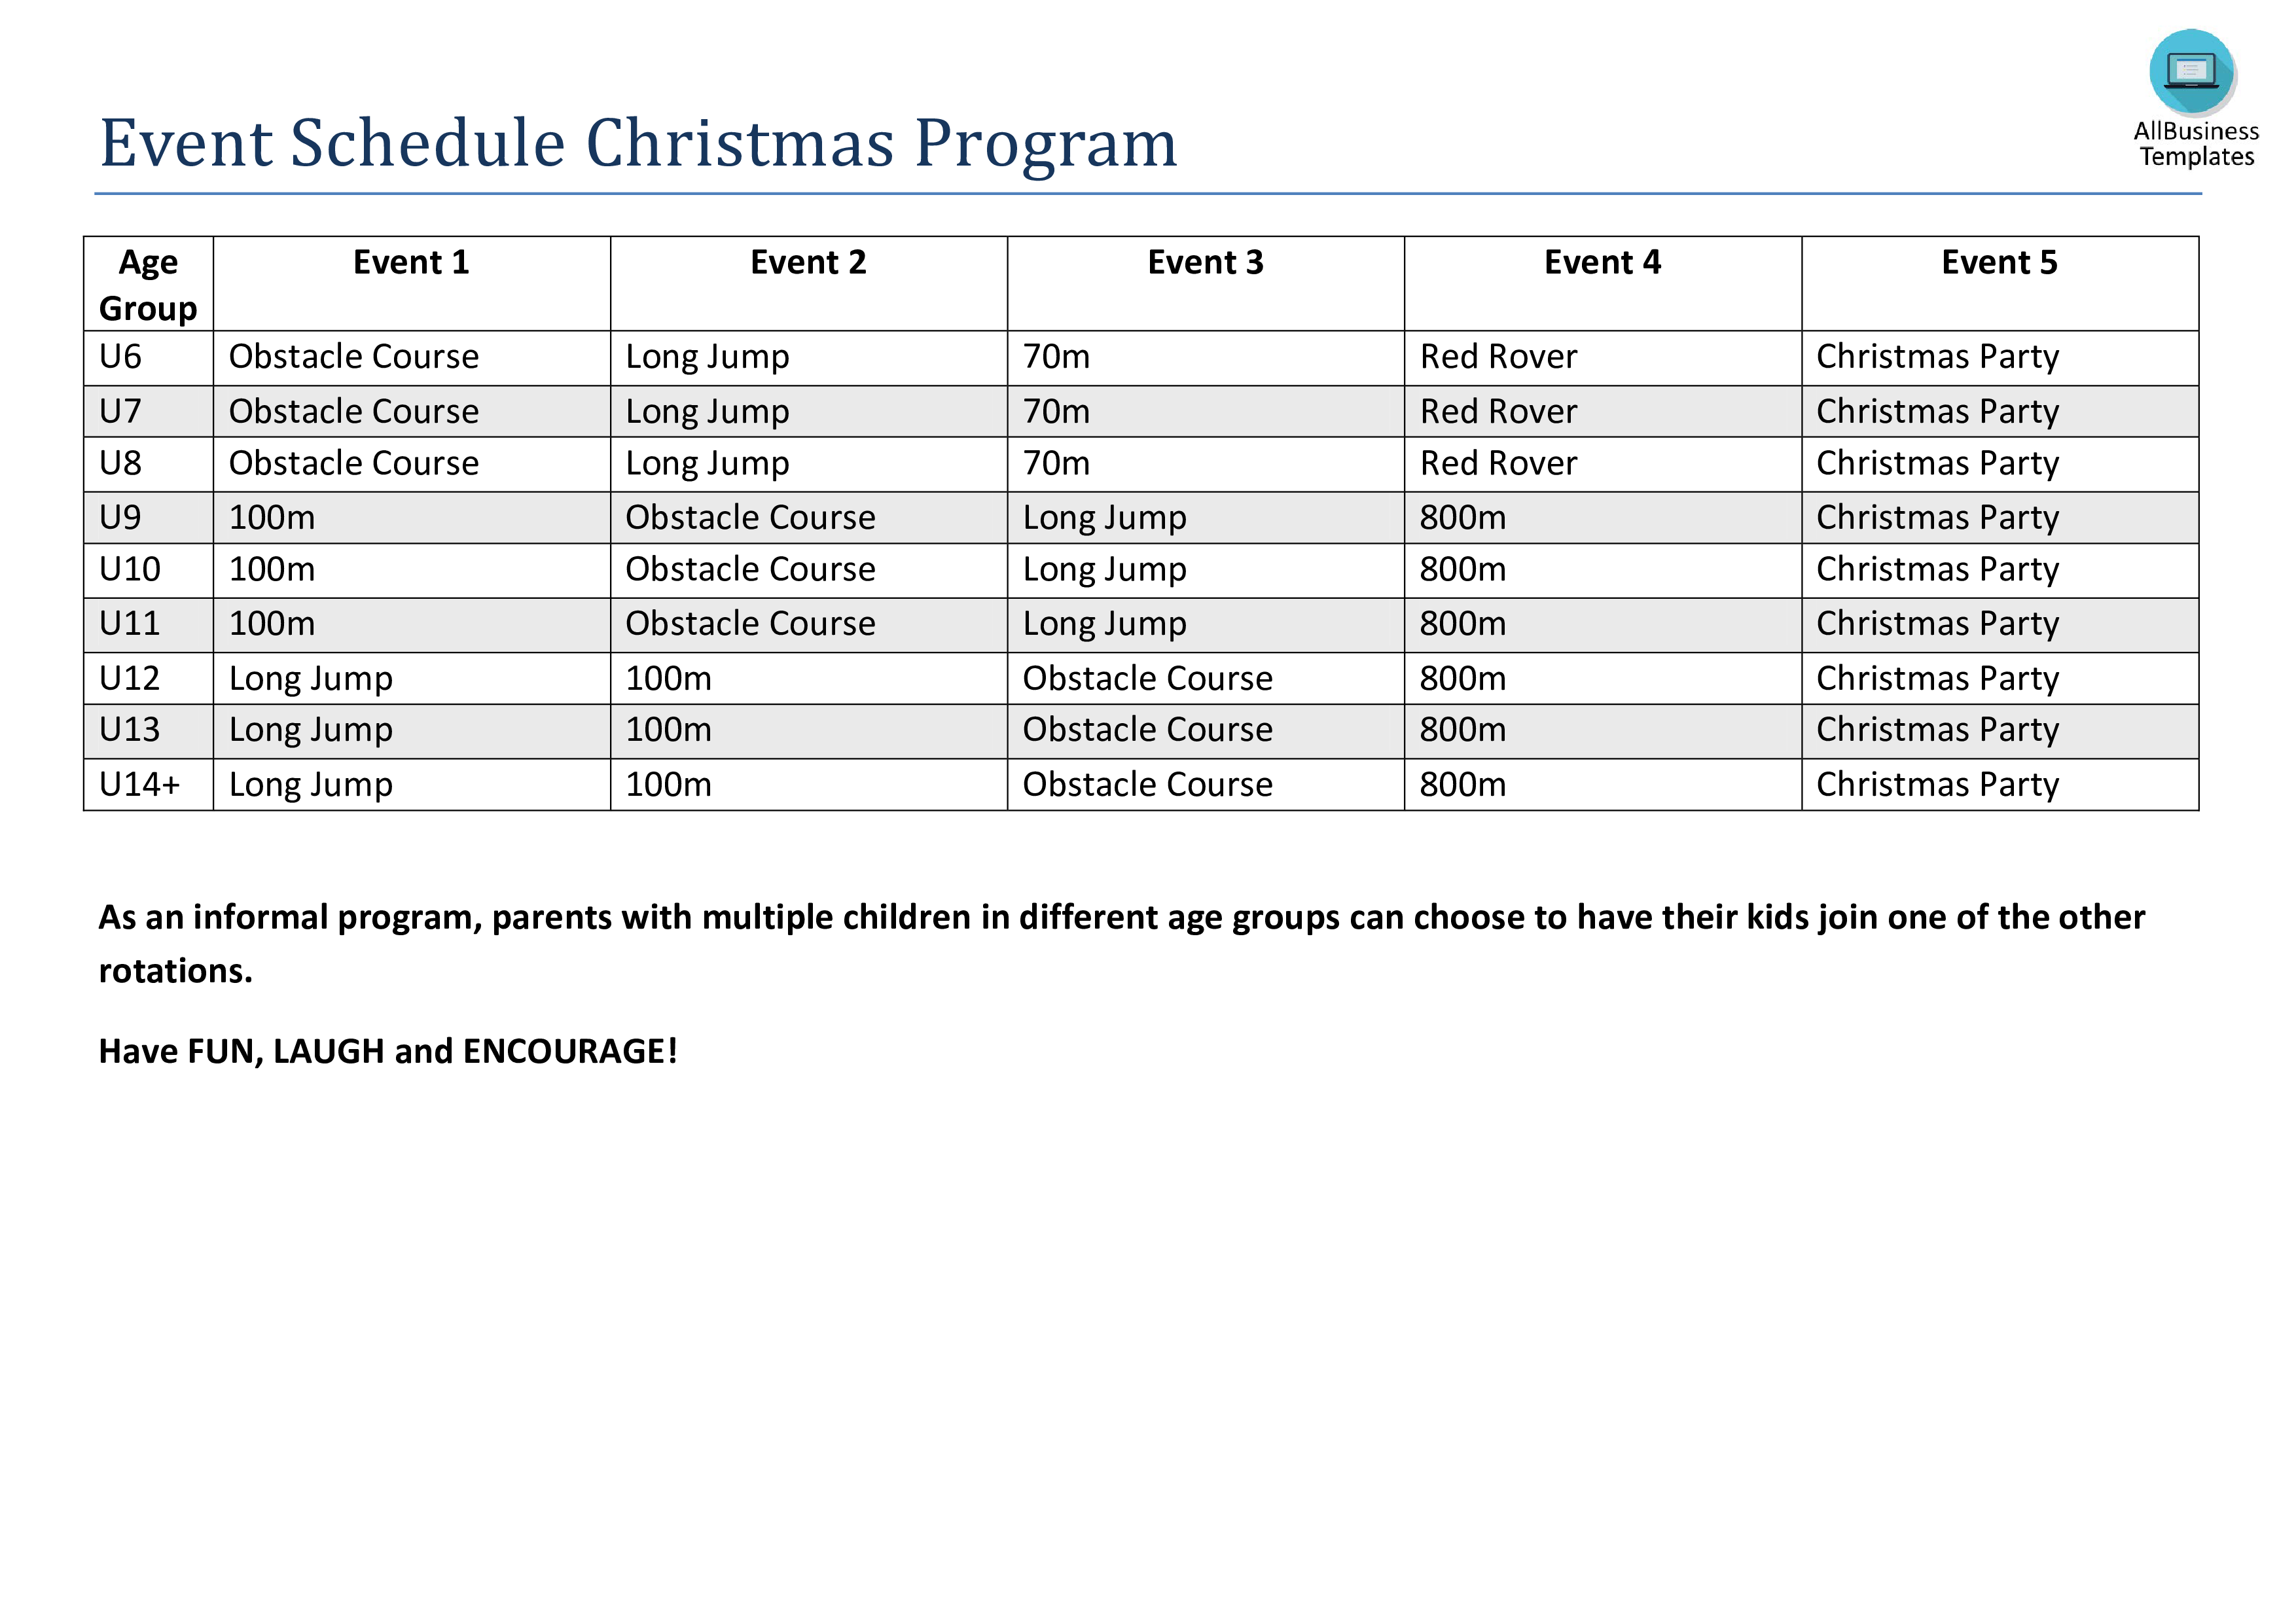 event schedule christmas program plantilla imagen principal